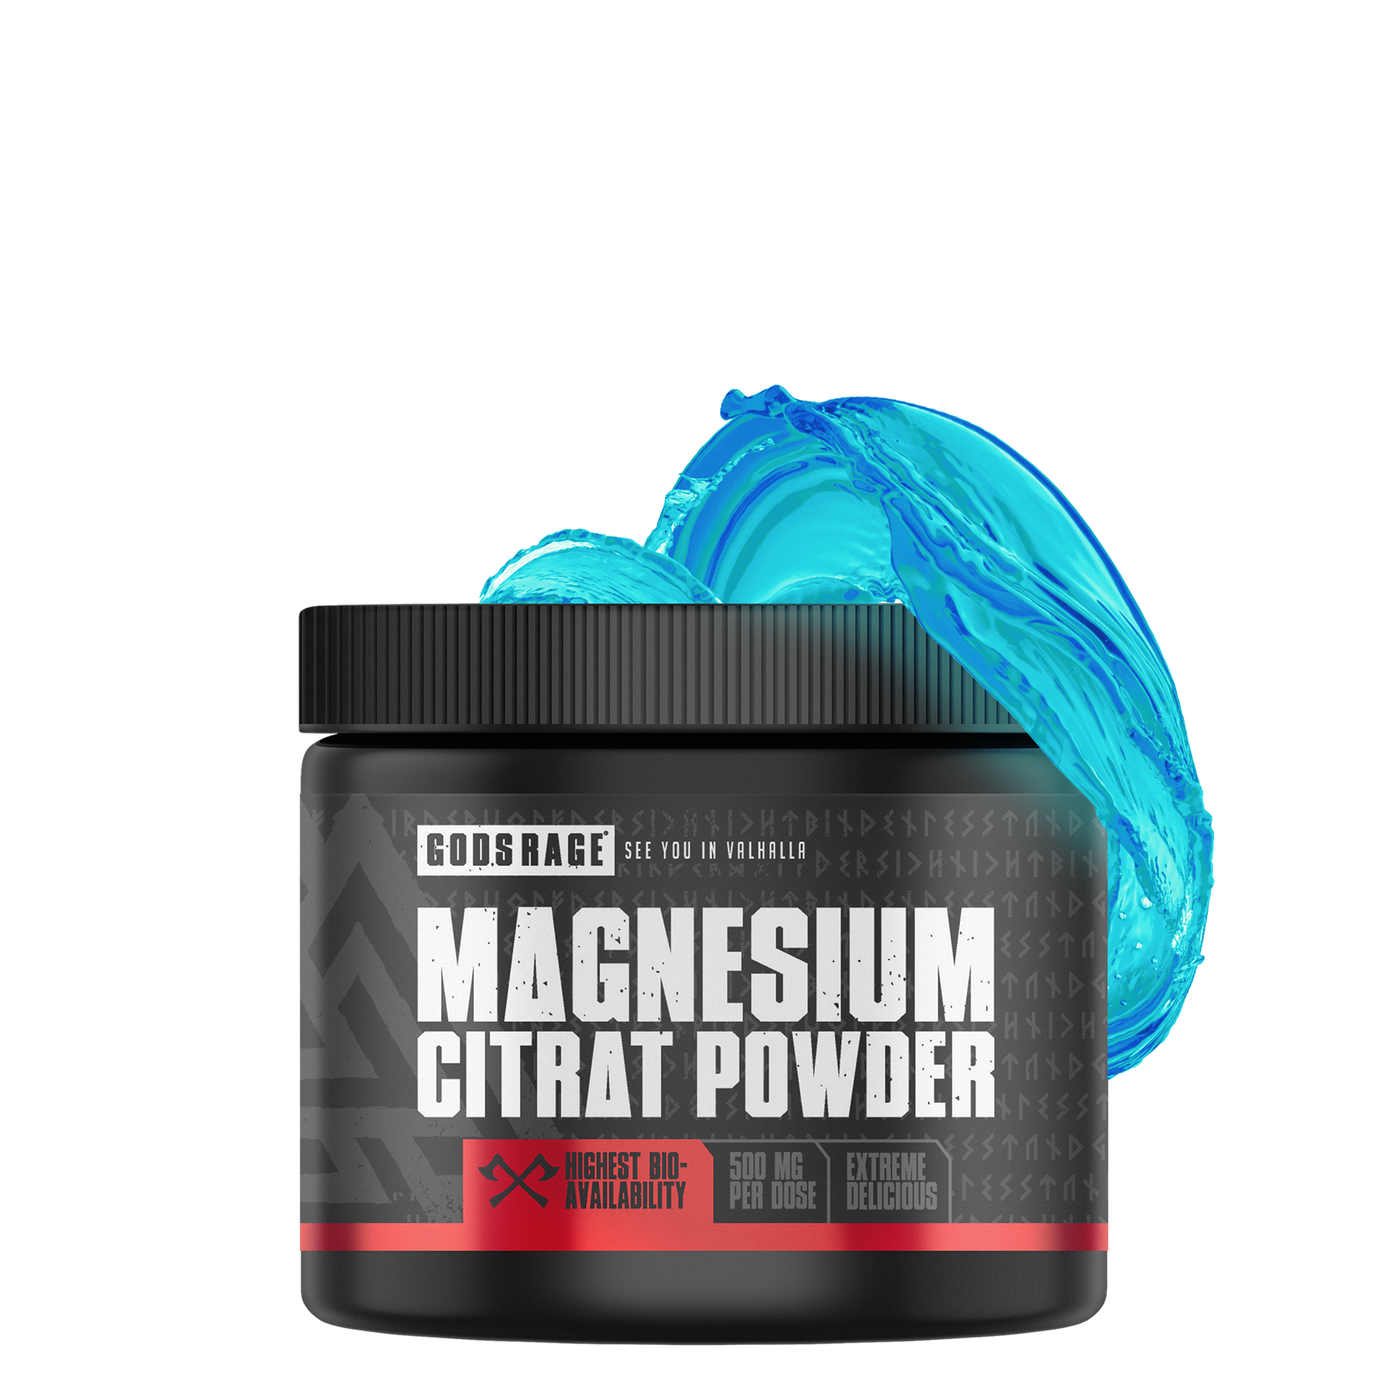 Magnesium Citrate Powder Ice Bonbon 250g